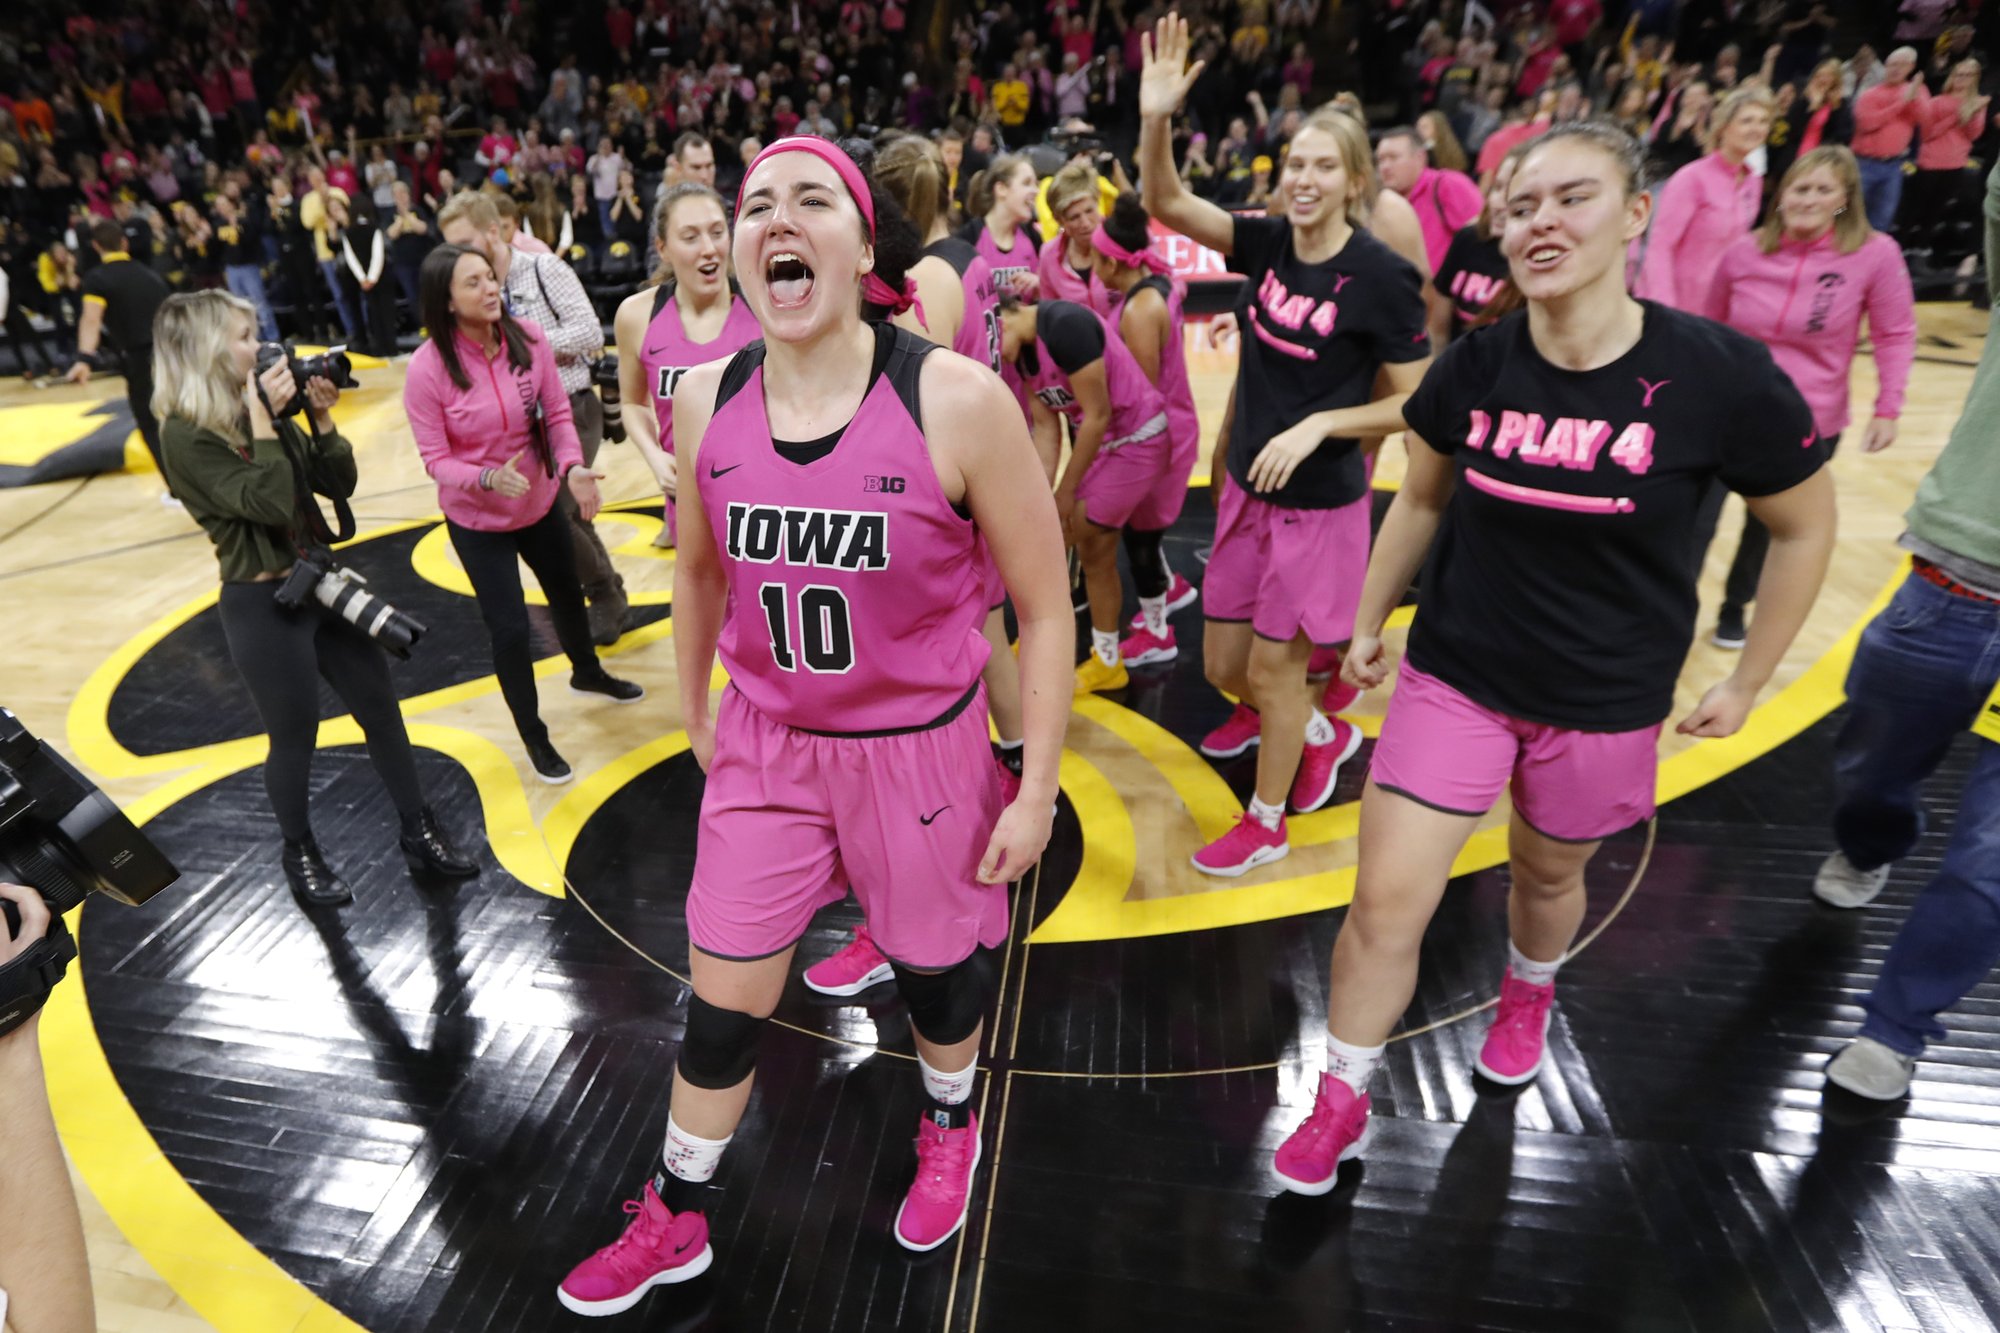 Why is iowa women's basketball wearing pink